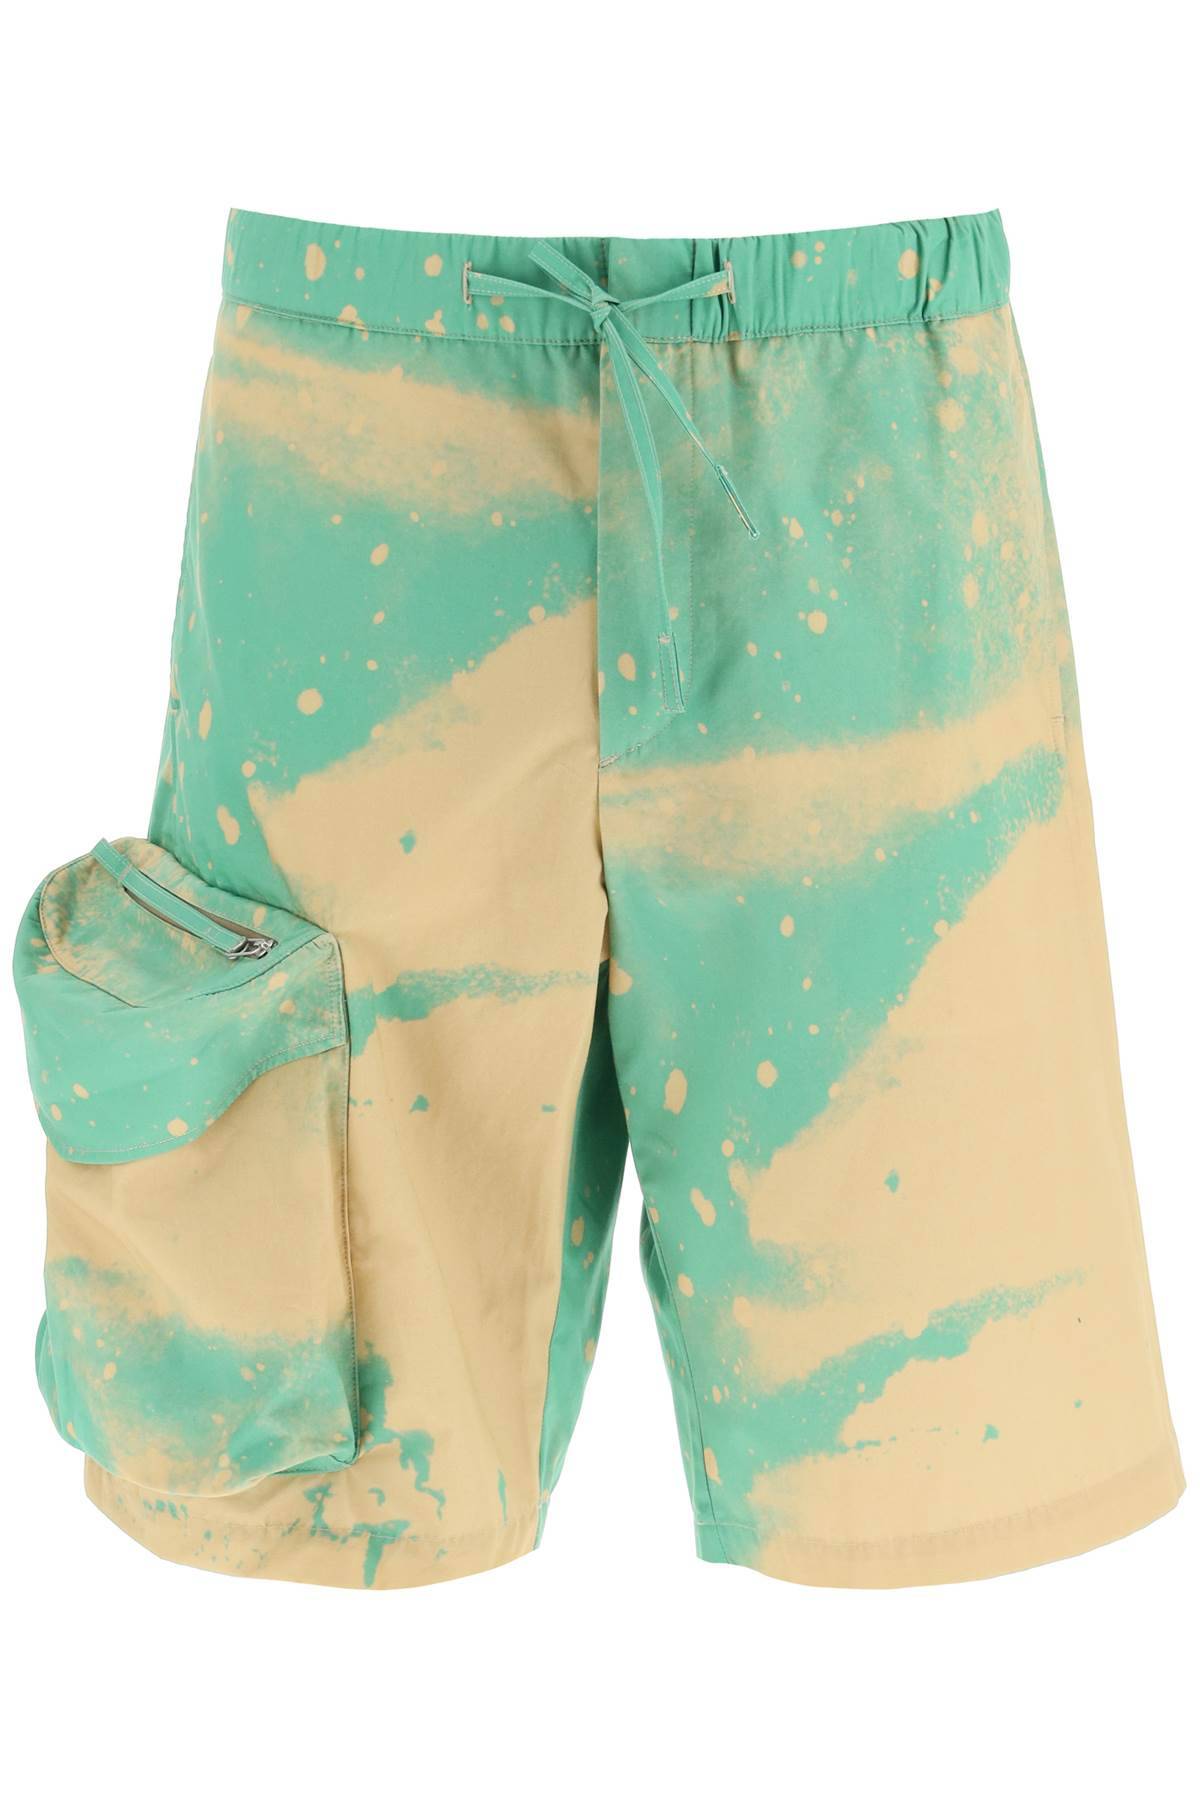 OAMC OAMC smudge oversized shorts with maxi pockets